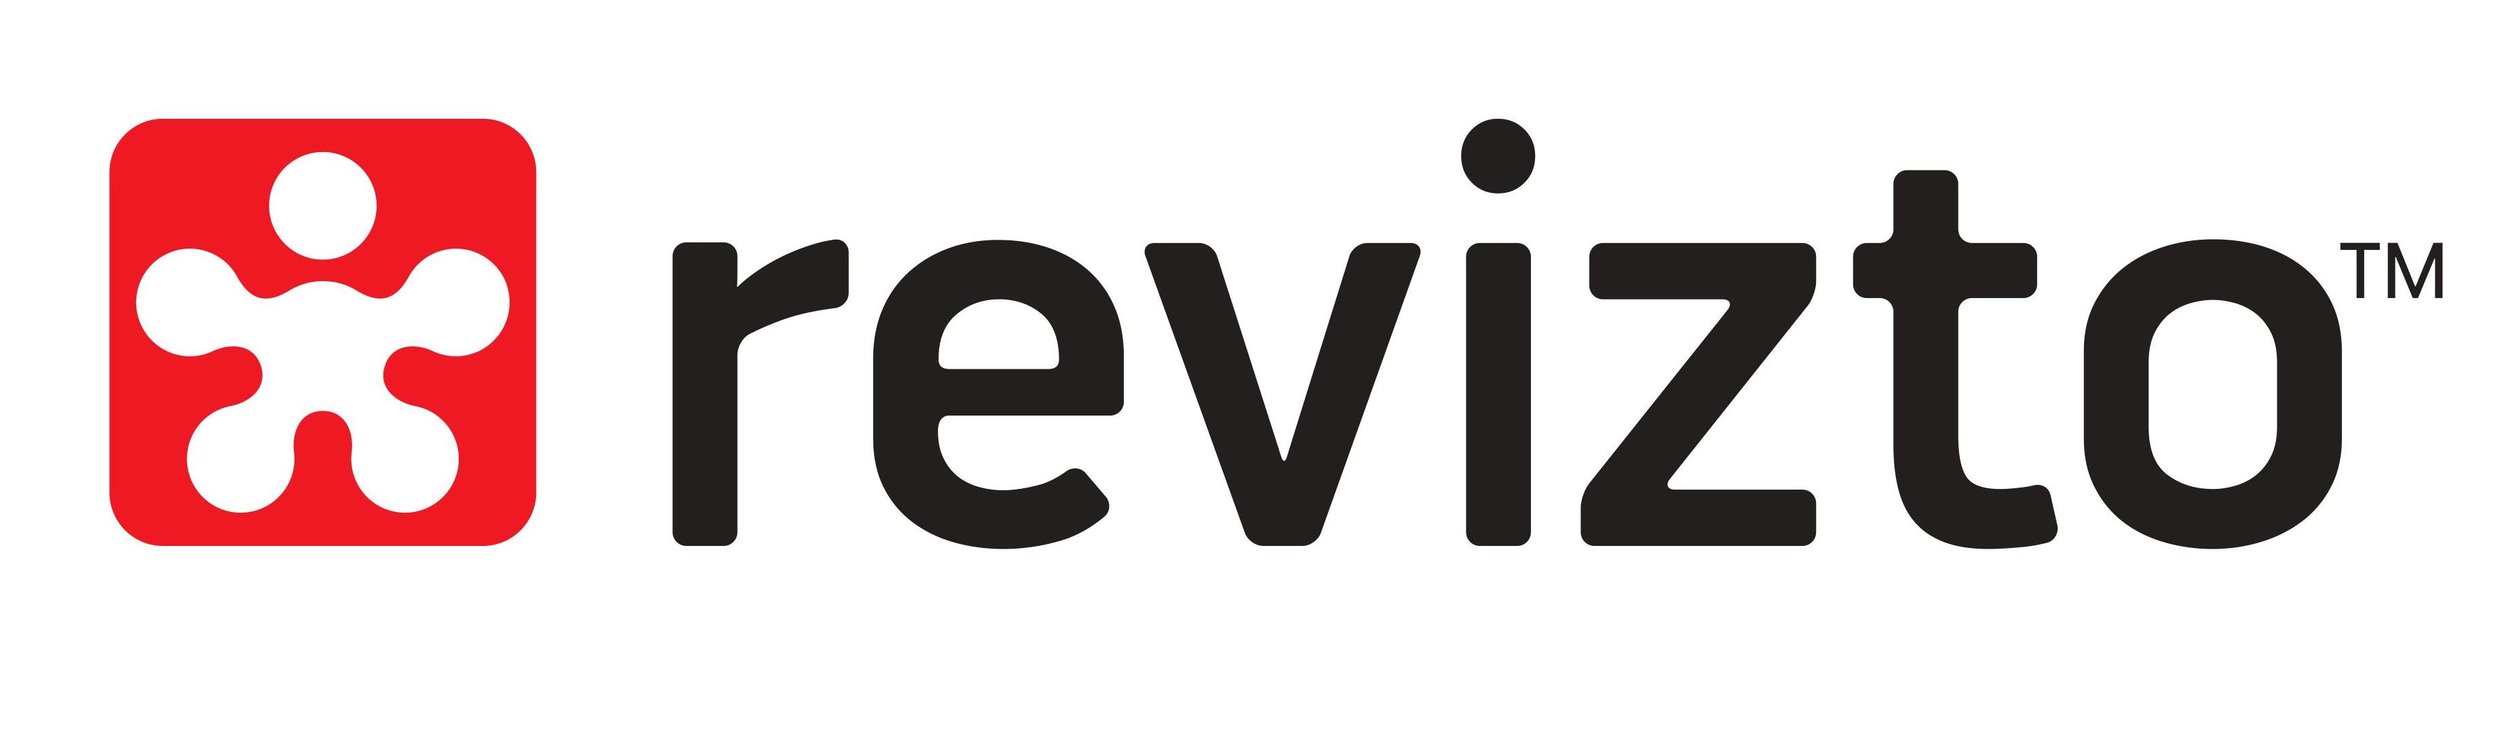 Revzto logo_horizontal_jpeg.jpg